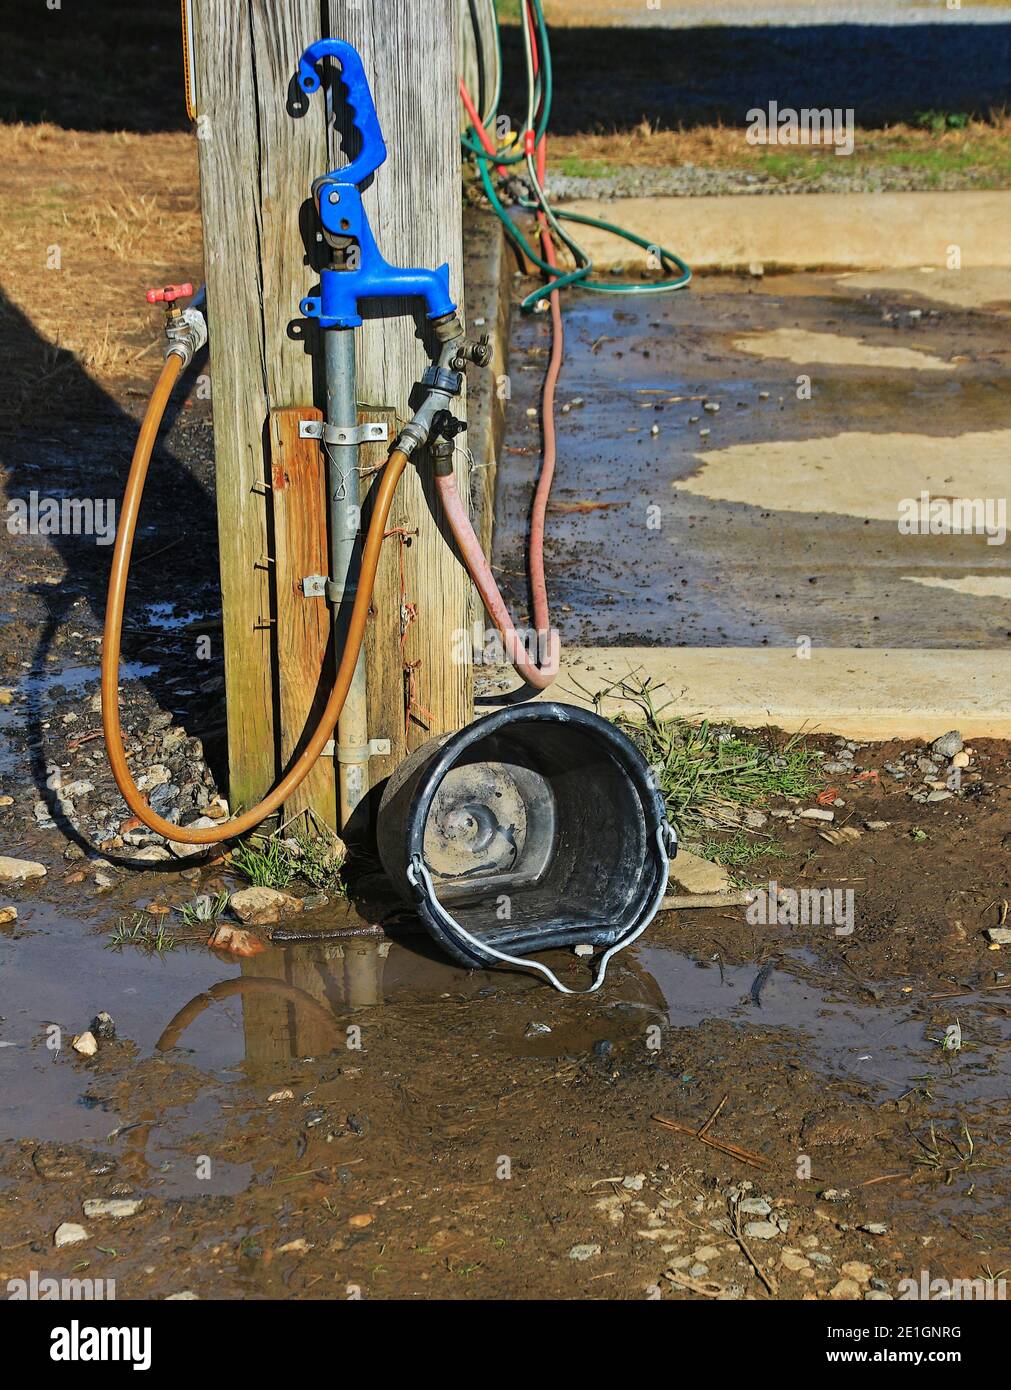 Hoses, spigots, and a useless bucket. Stock Photo